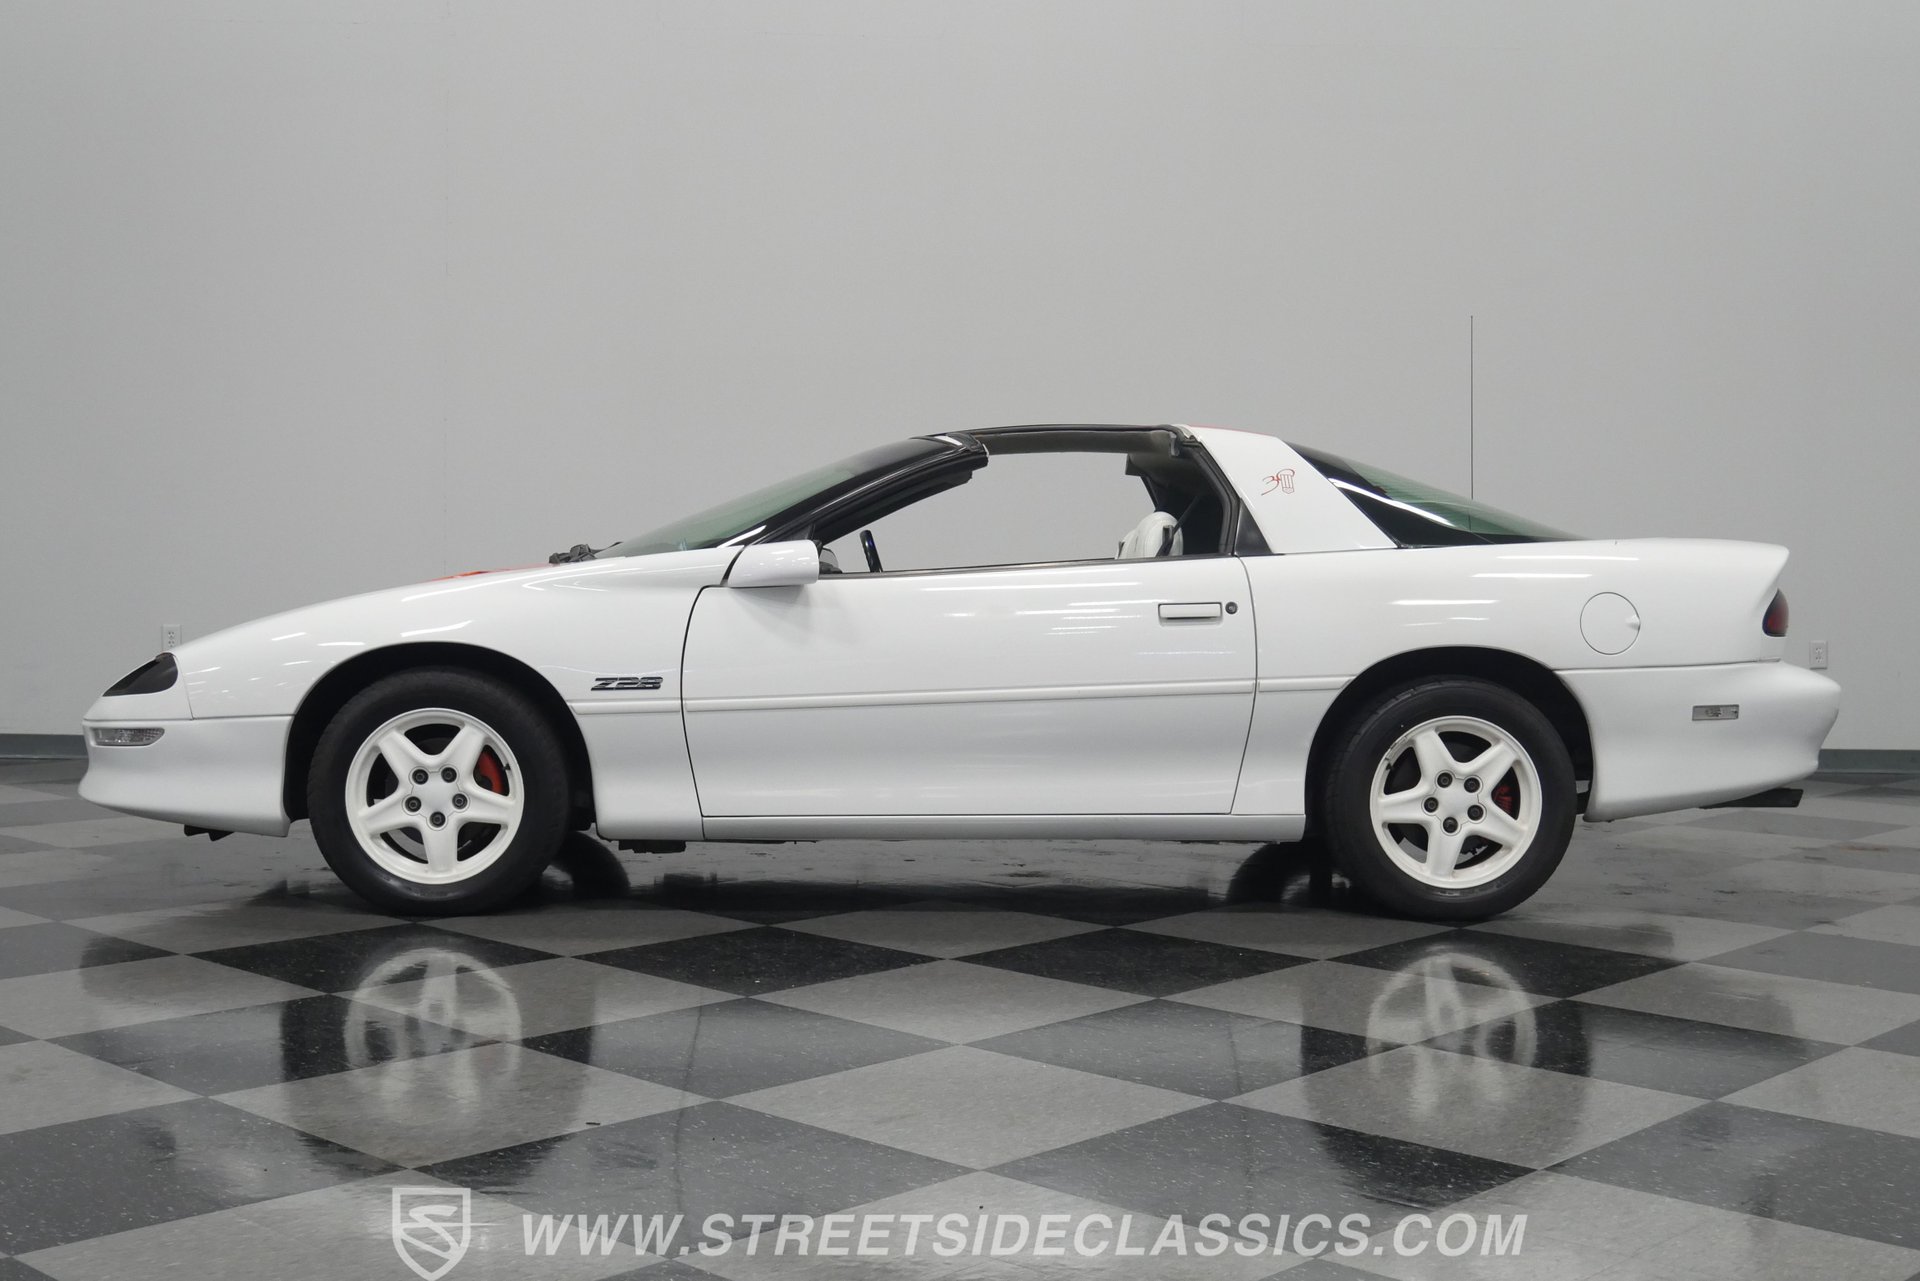 1997 Chevrolet Camaro | Classic Cars for Sale - Streetside Classics